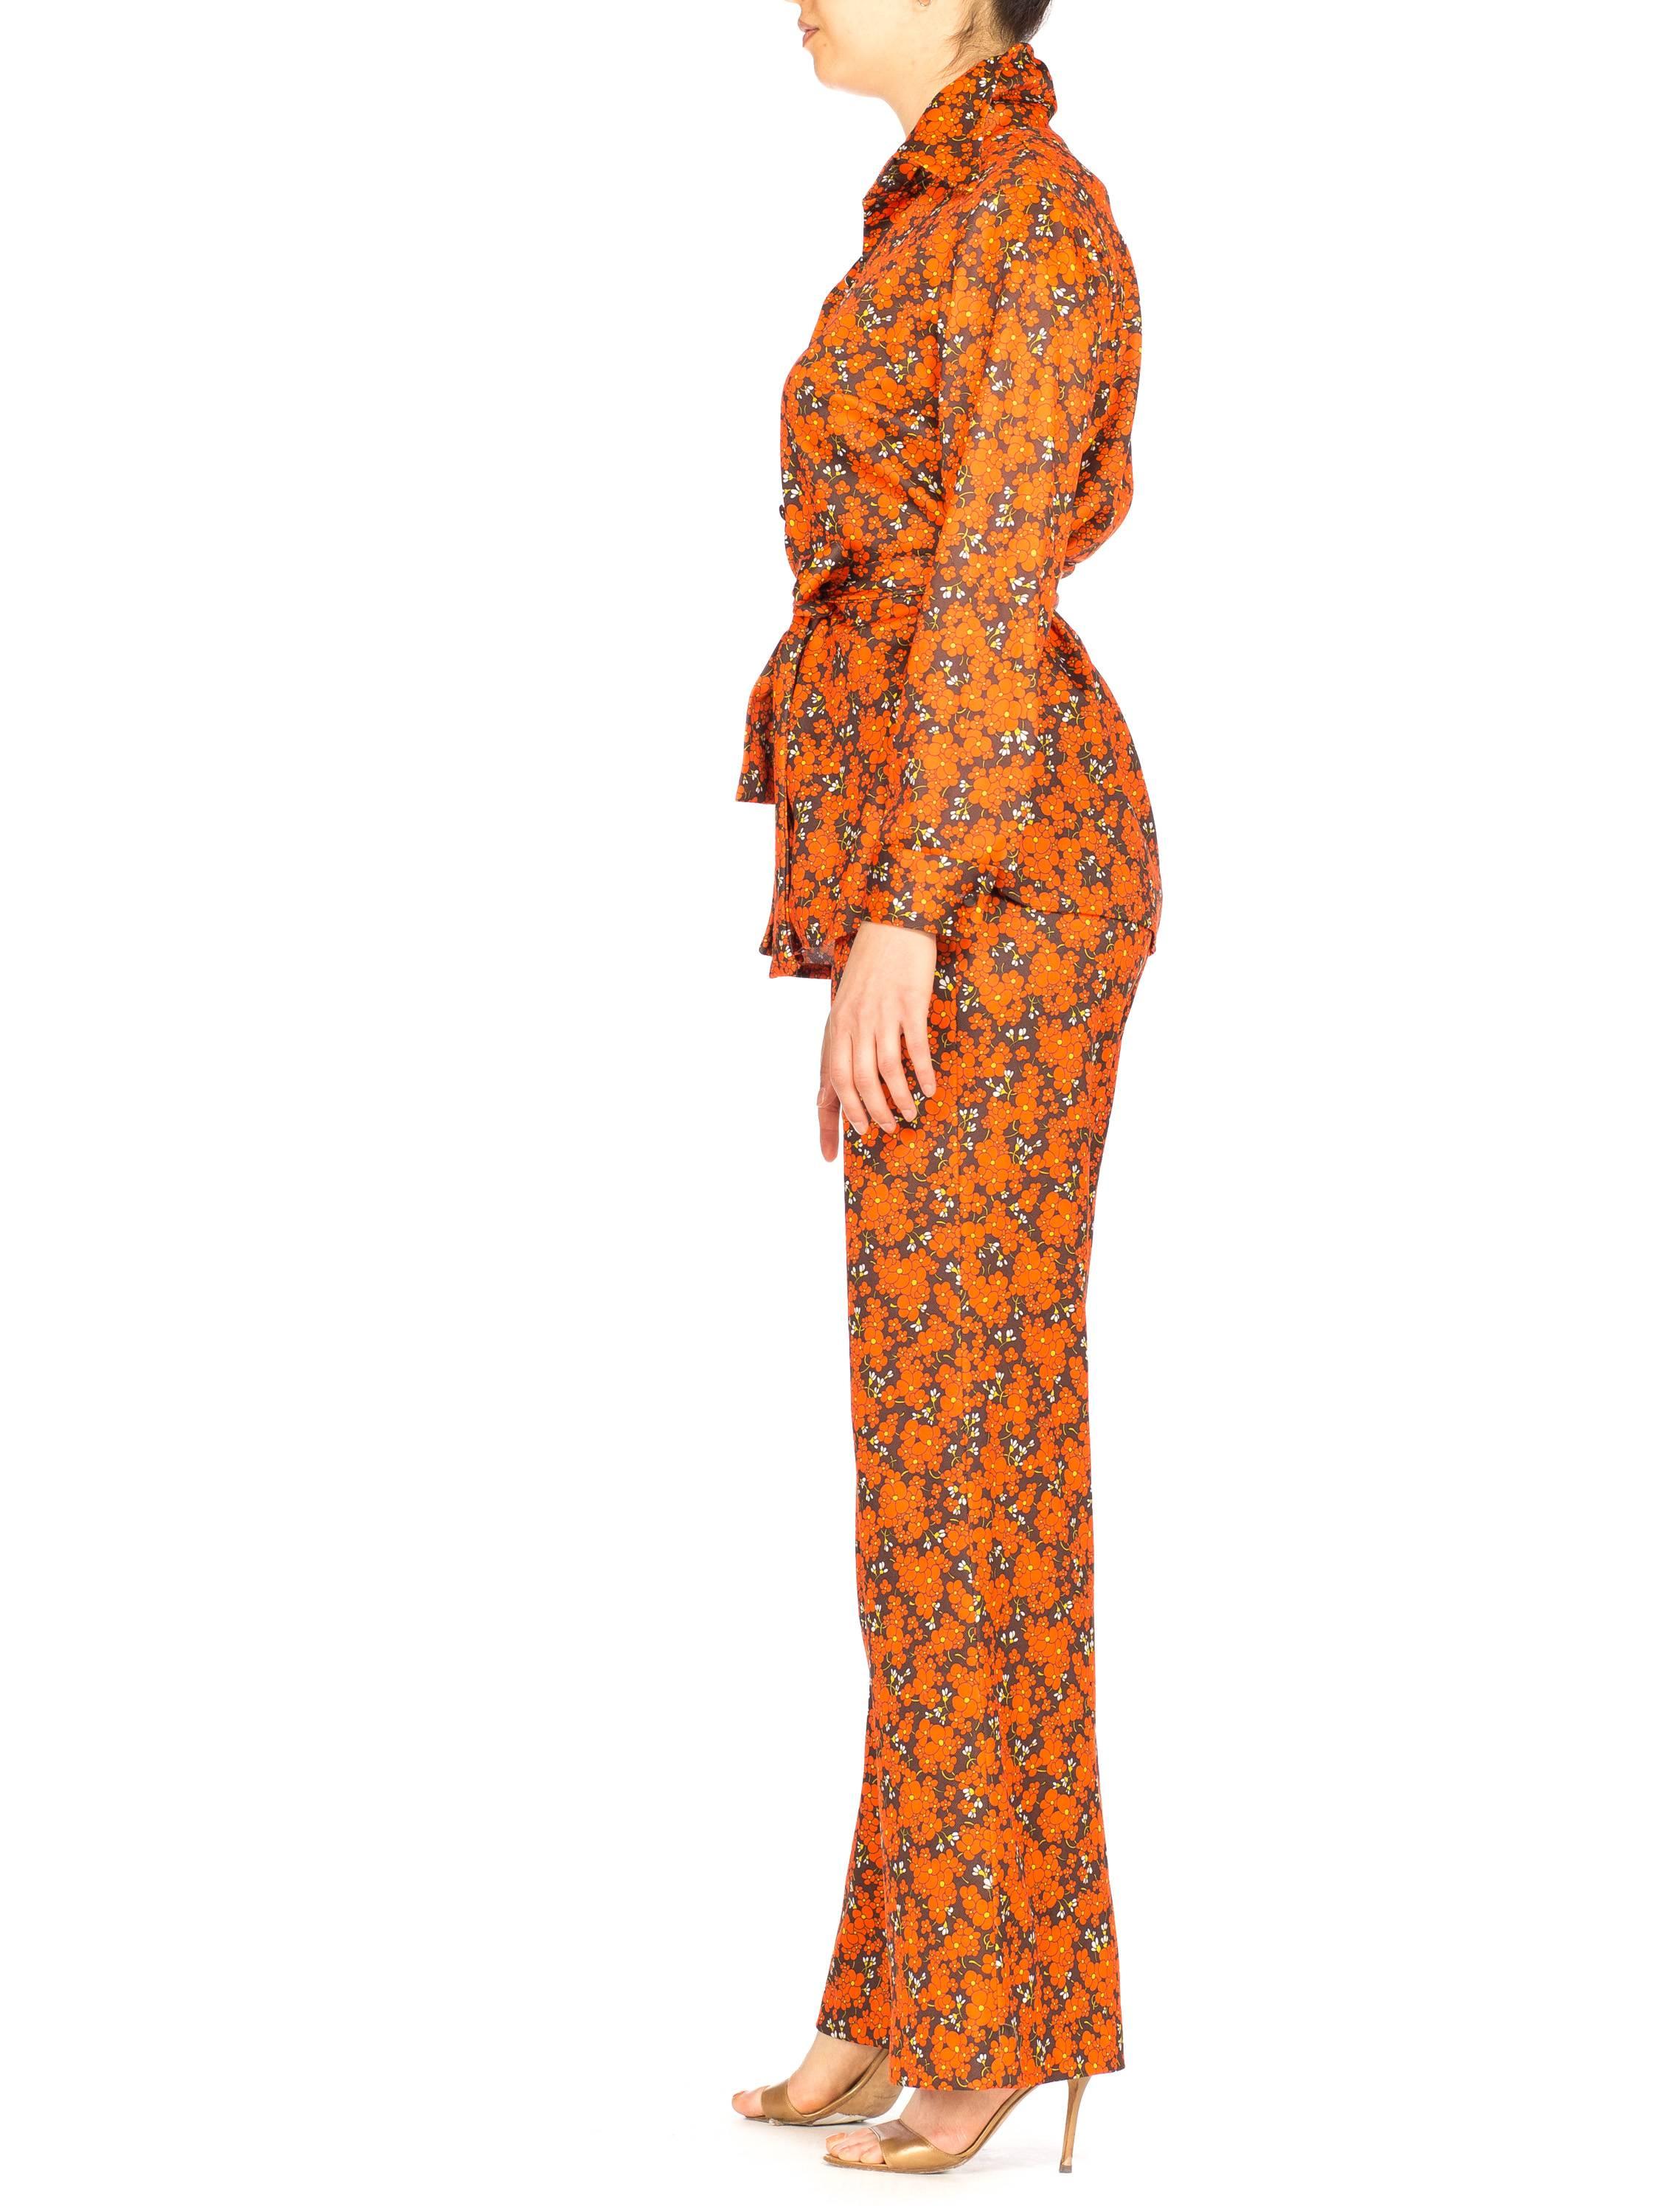 Women's Orange and Brown Floral Mod Disco Pantsuit Set, 1970s